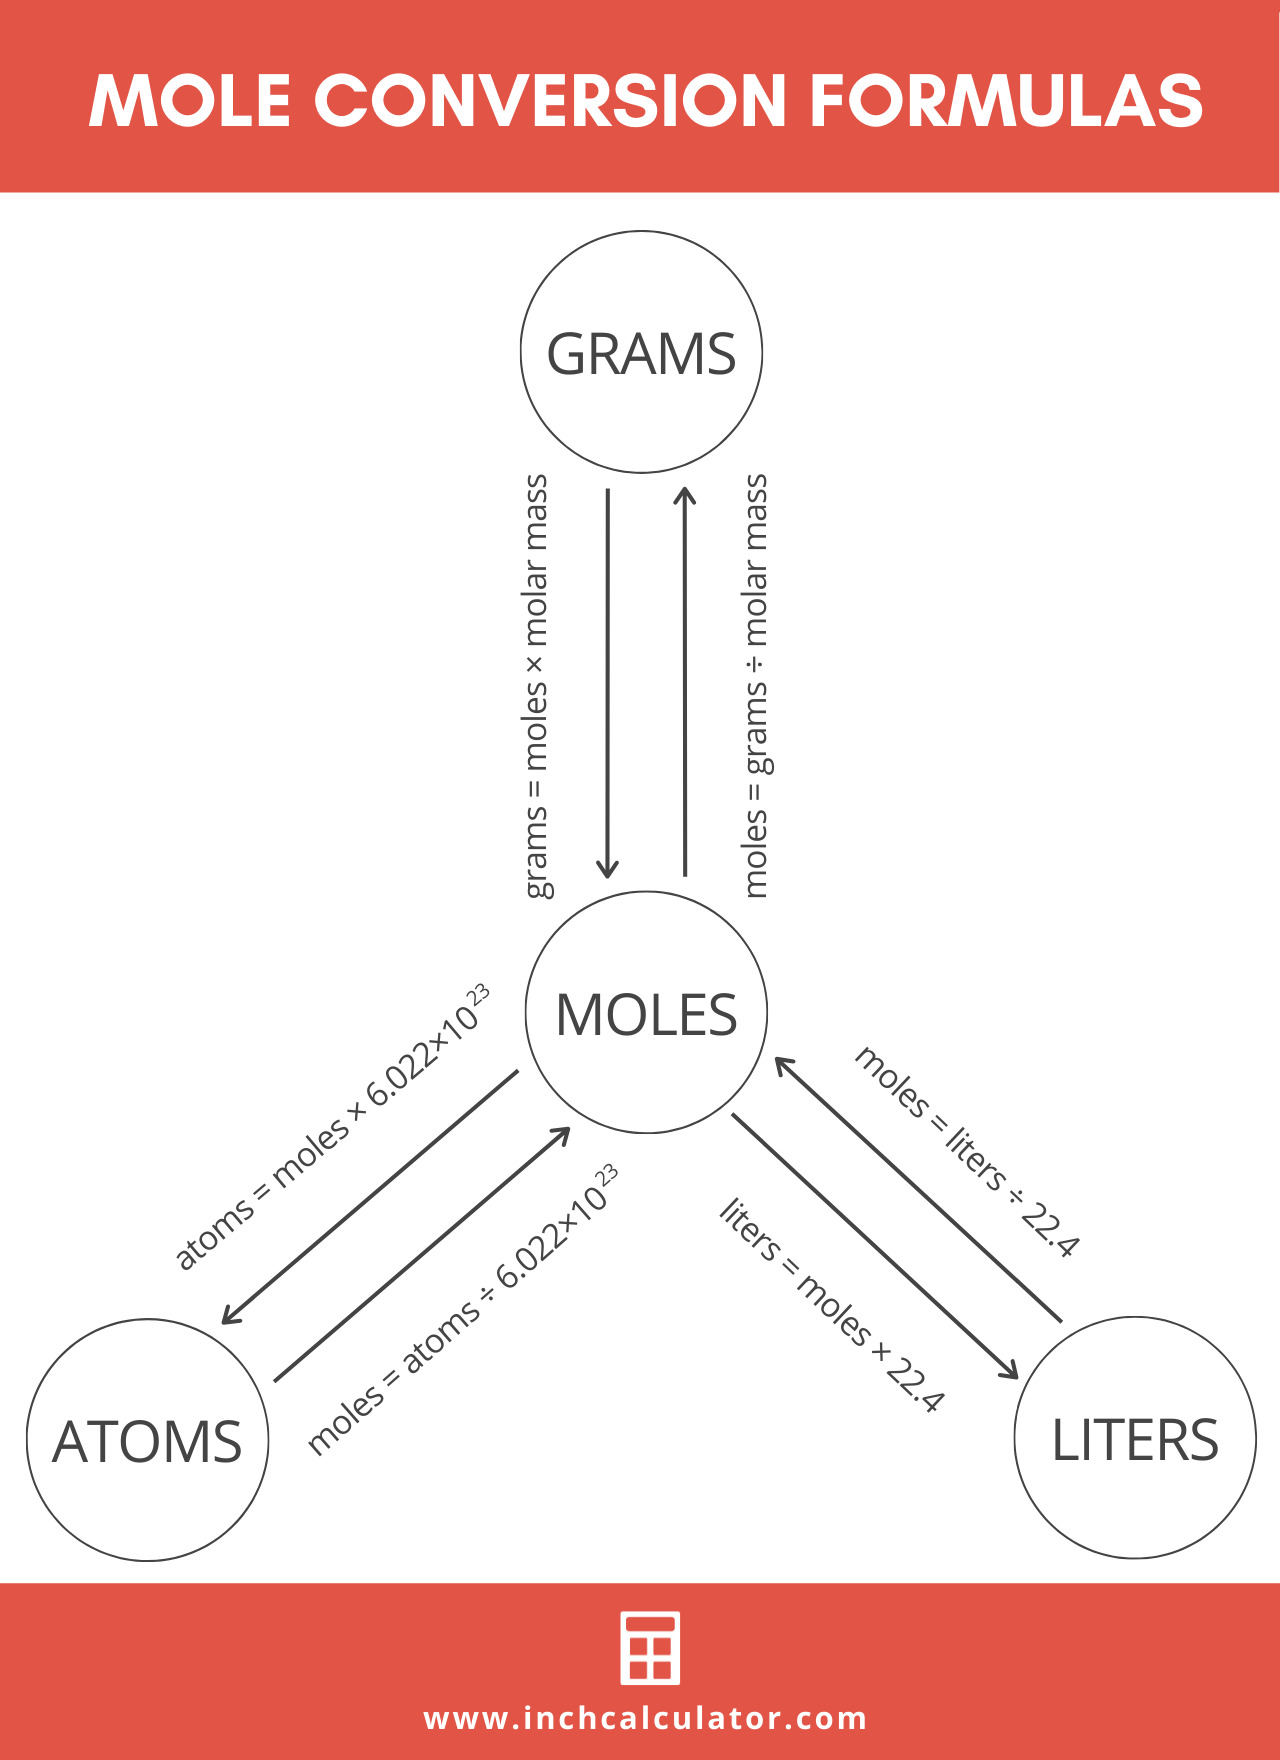 infographic showing six different mole conversion formulas